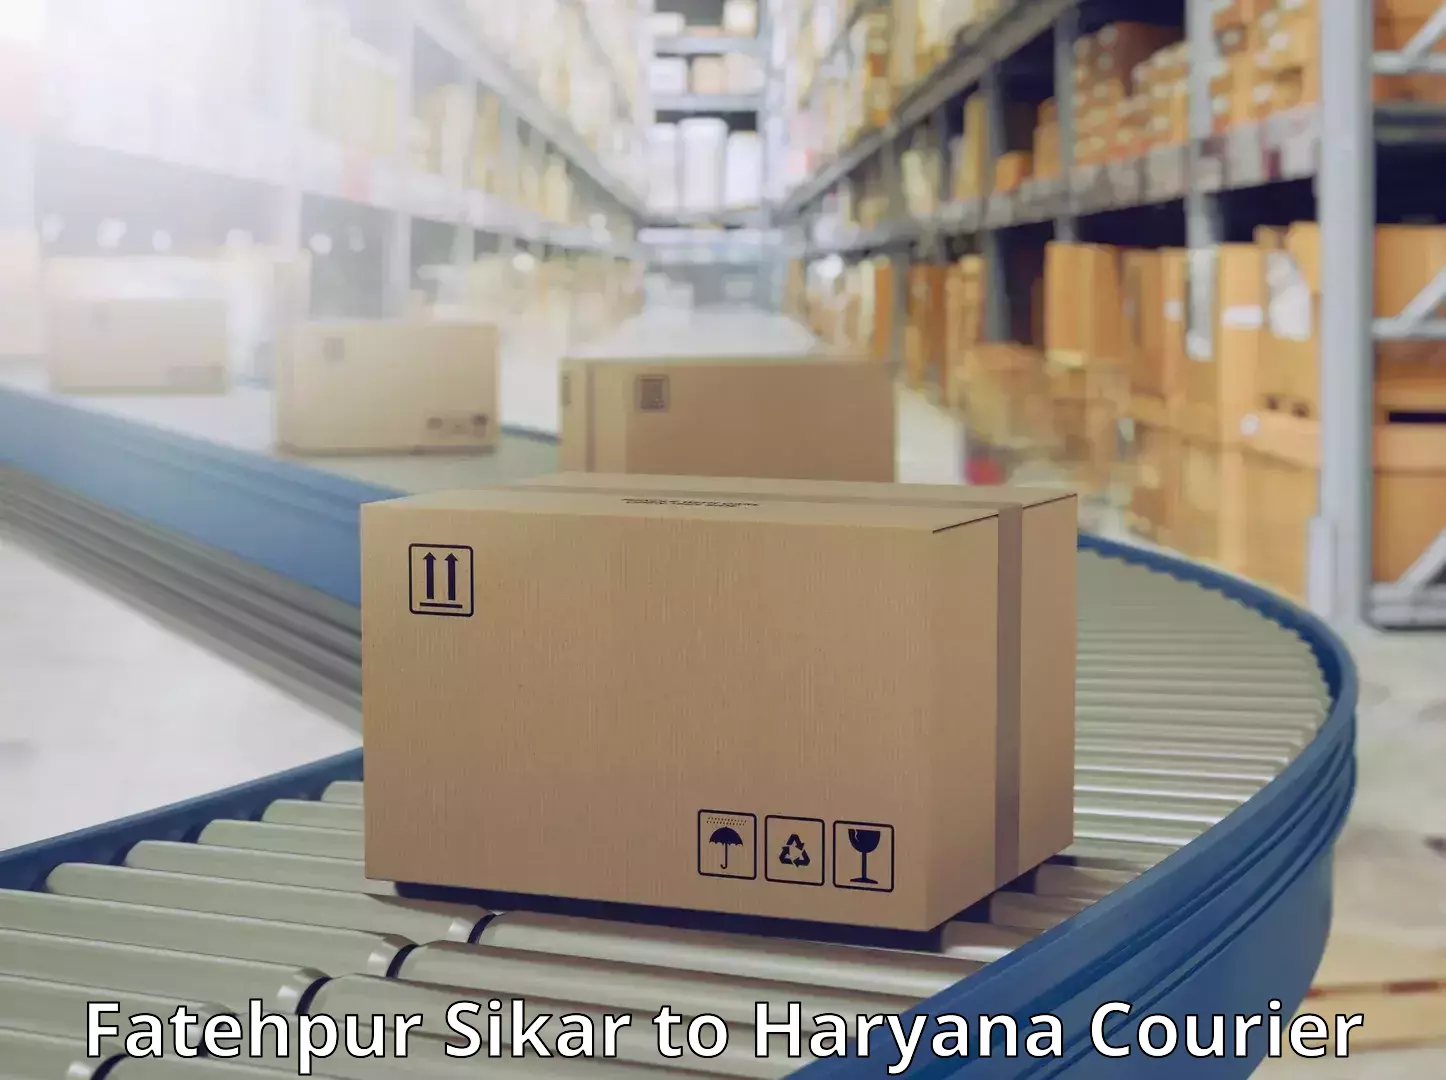 International courier networks Fatehpur Sikar to Haryana